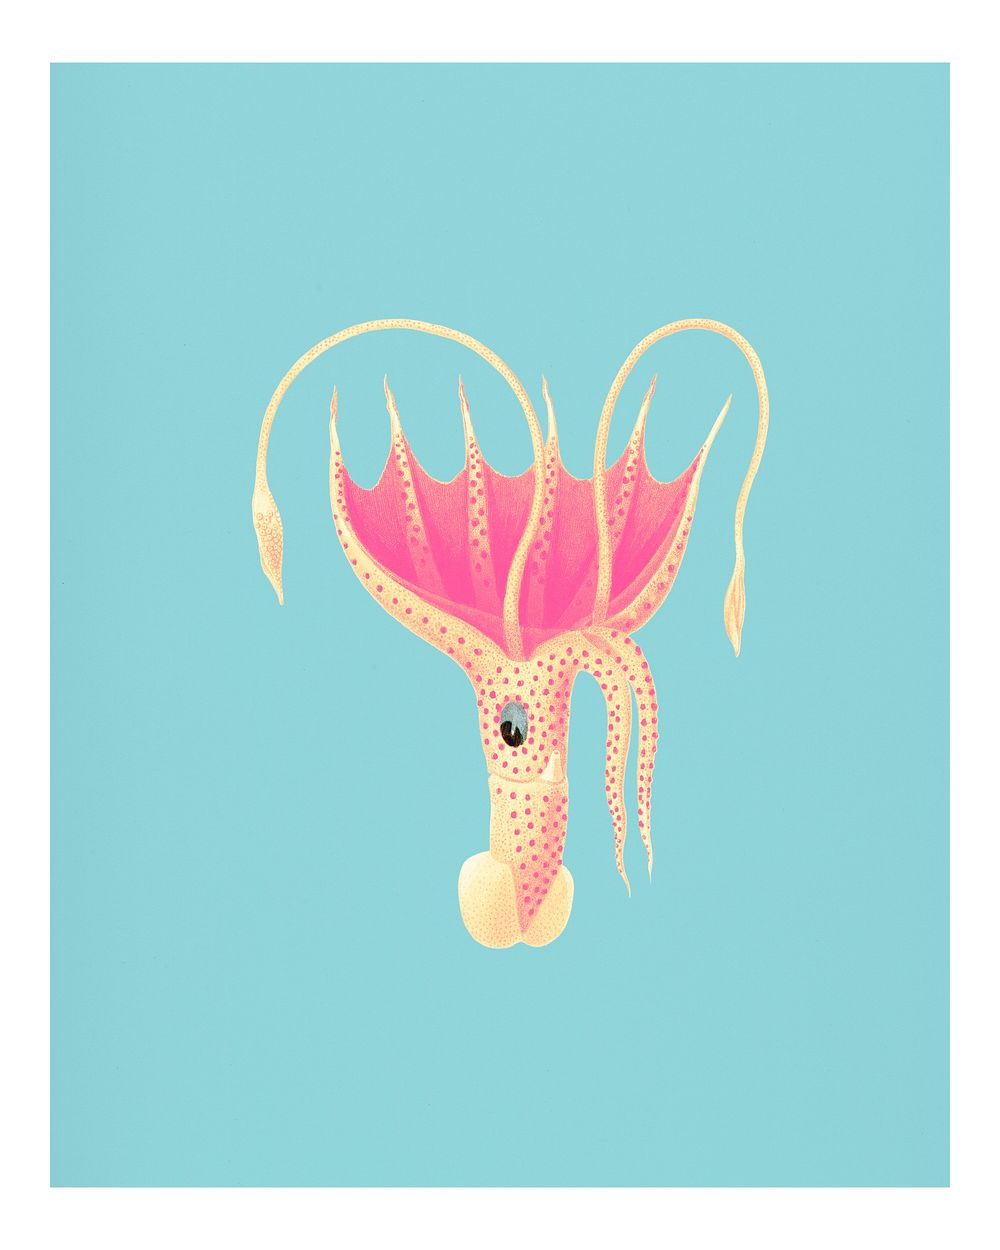 Vintage umbrella squid (Histioteuthis bonnellii) illustration wall art print and poster.